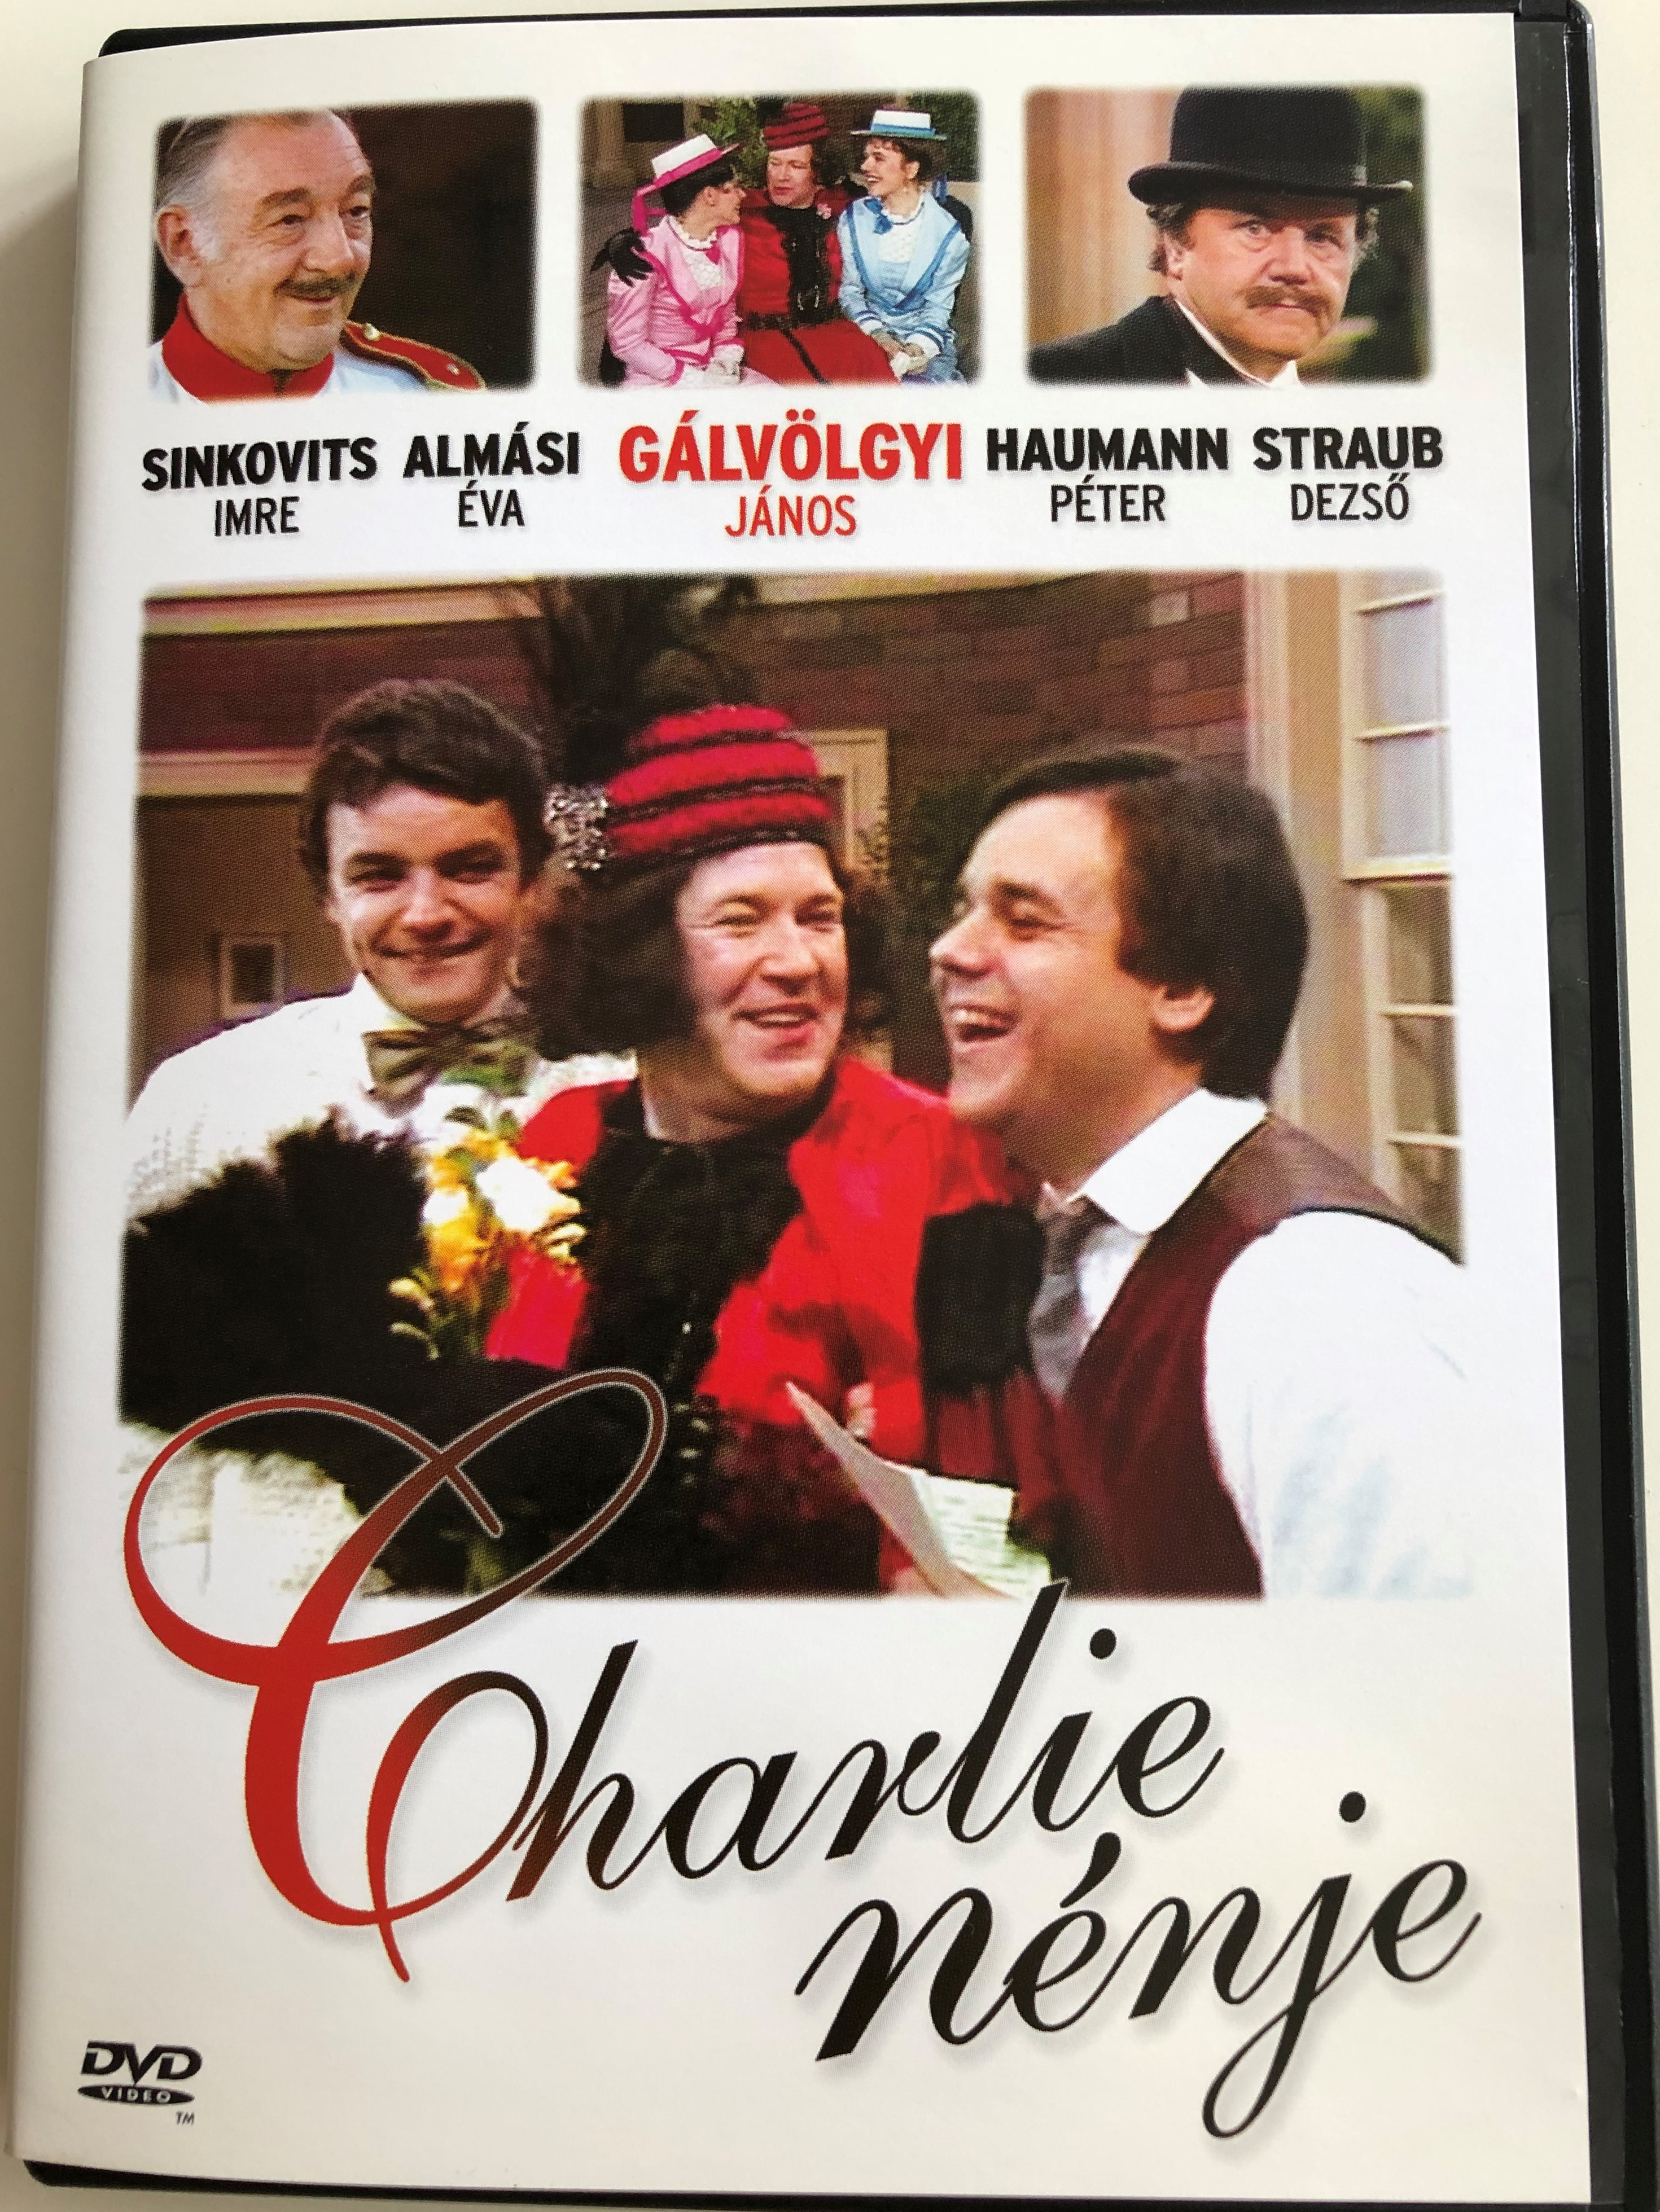 charley-n-nje-theatre-play-by-brandon-thomas-dvd-1986-hungarian-theatre-film-directed-by-m-lnay-levente-starring-g-lv-lgyi-j-nos-kalocsay-mikl-s-straub-dezs-haumann-p-ter-sinkovits-imre-alm-si-va-t-th-enik-kocsis-1-.jpg